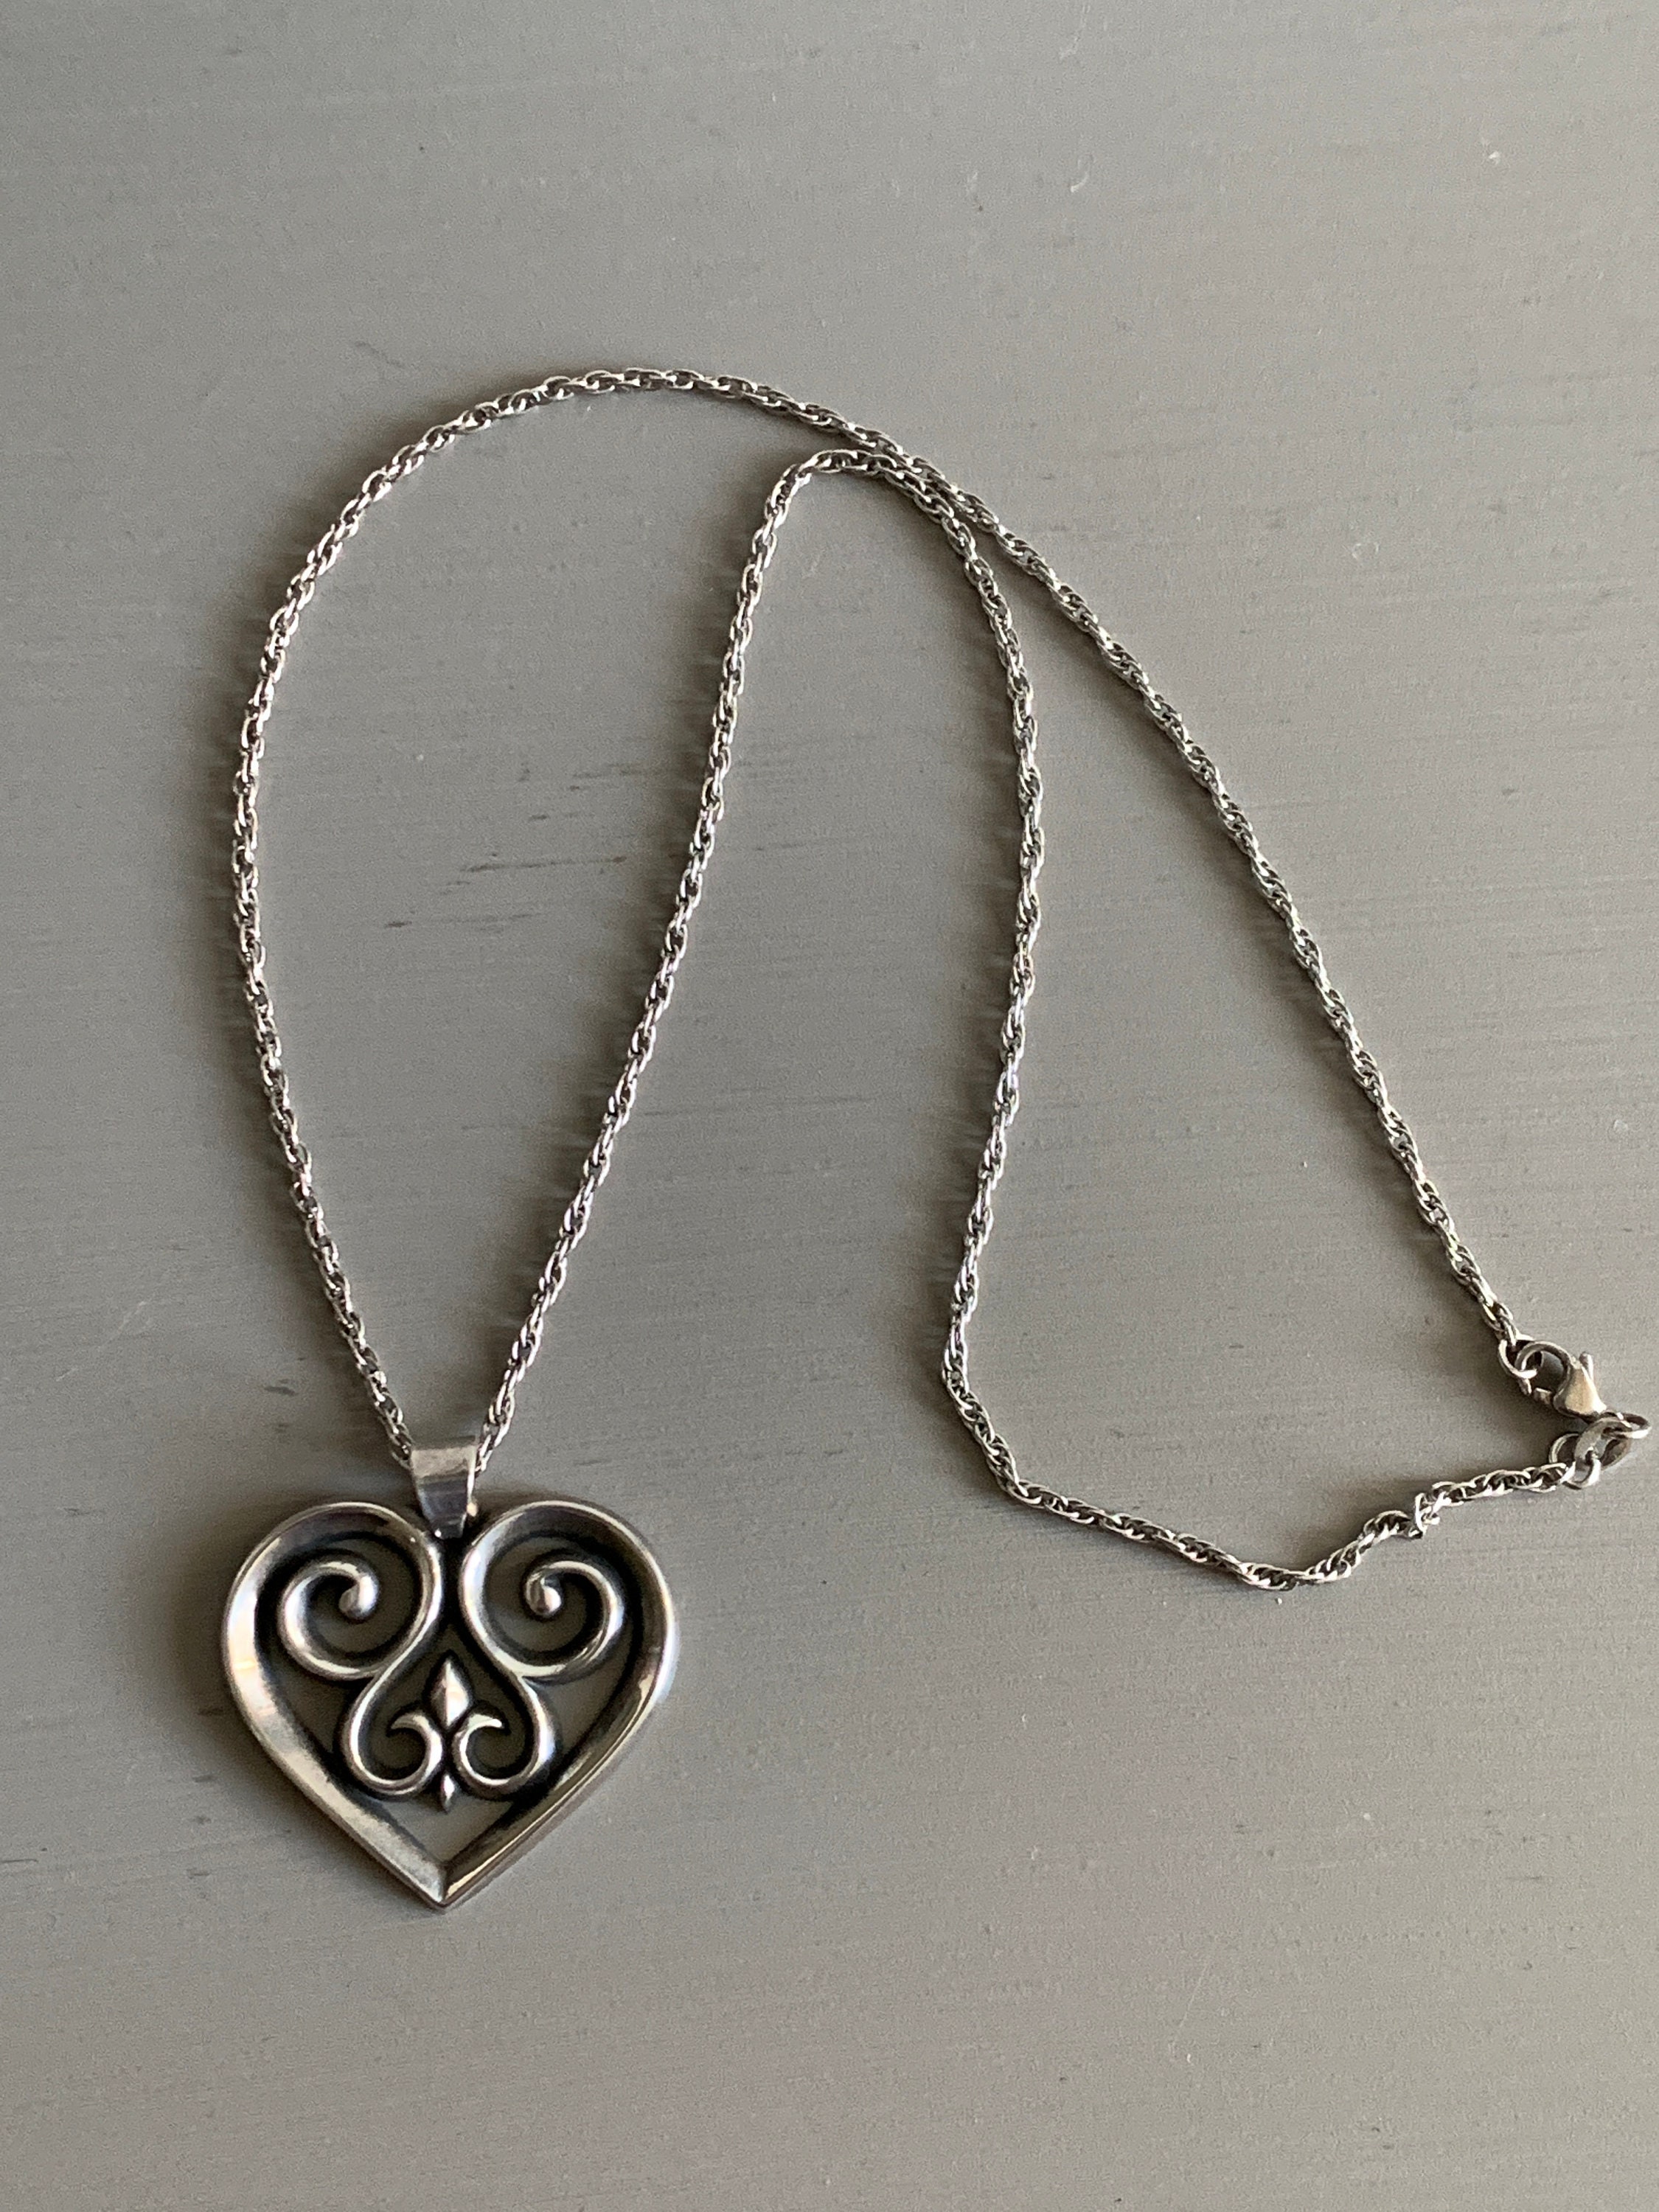 Retired James Avery Heart Key Necklace Length Adjusts NEAT Piece! JA  Hangtag | eBay